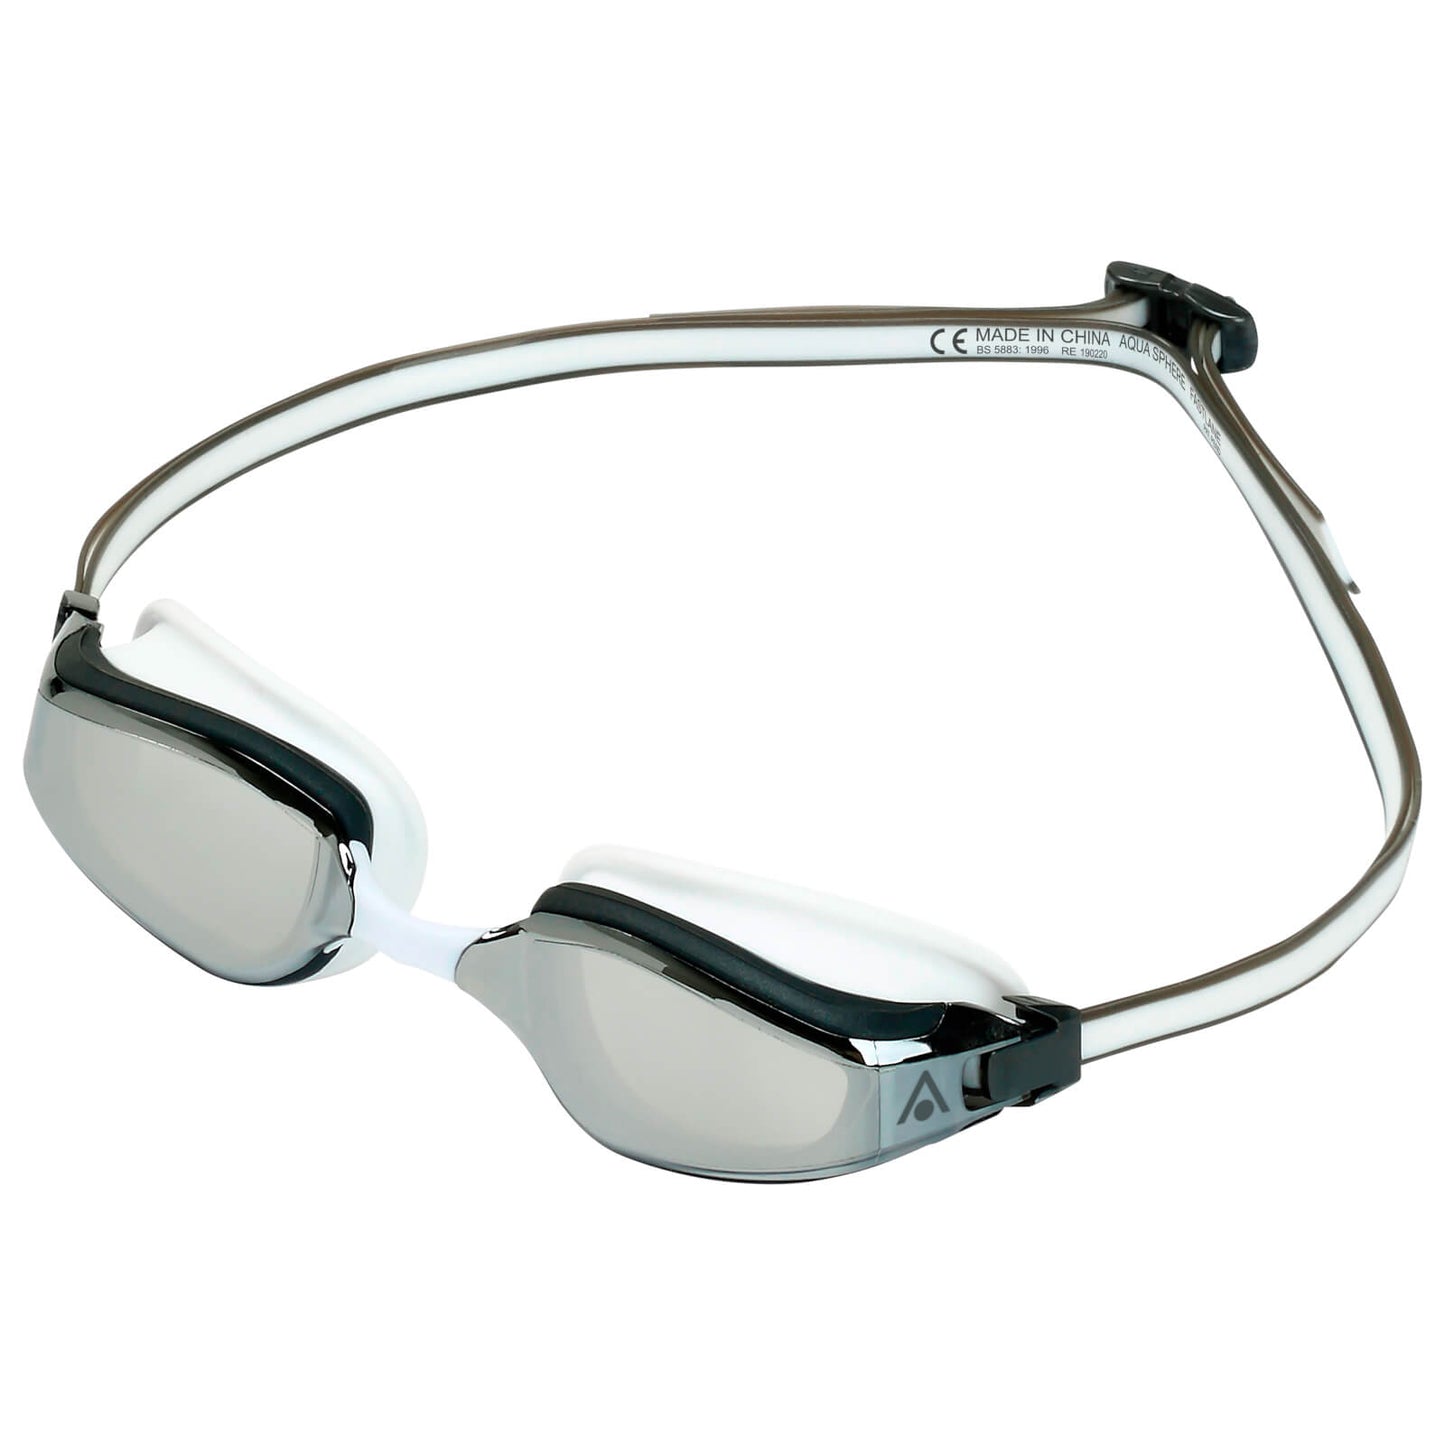 Men's Swimming Goggles Aqua Sphere Fastlane Adult Fitness Pool White/Grey - Silver Mirrored